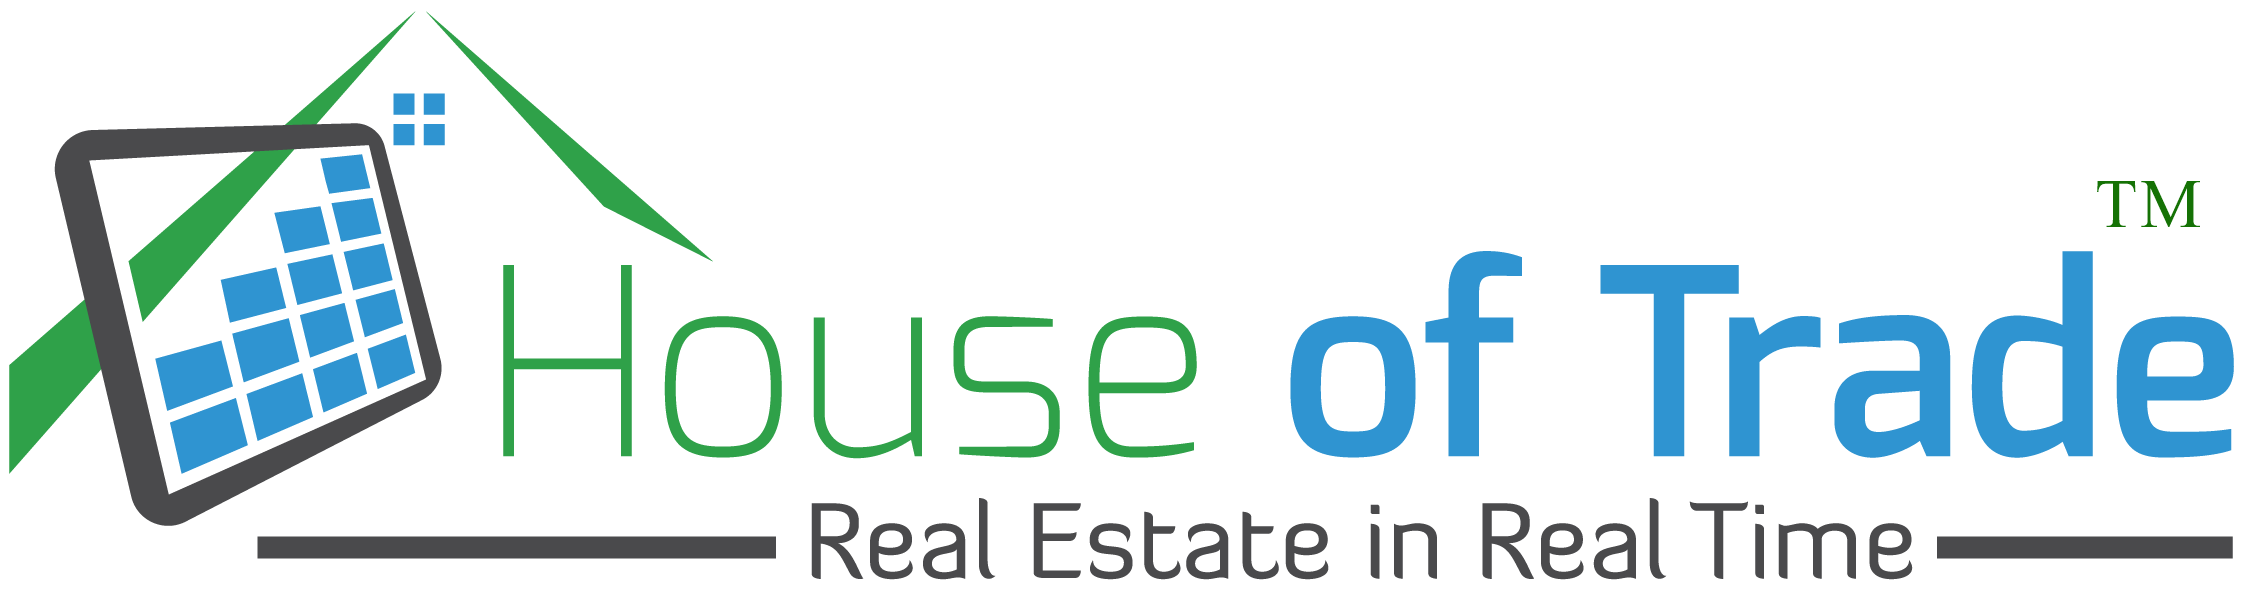 House of Trade logo